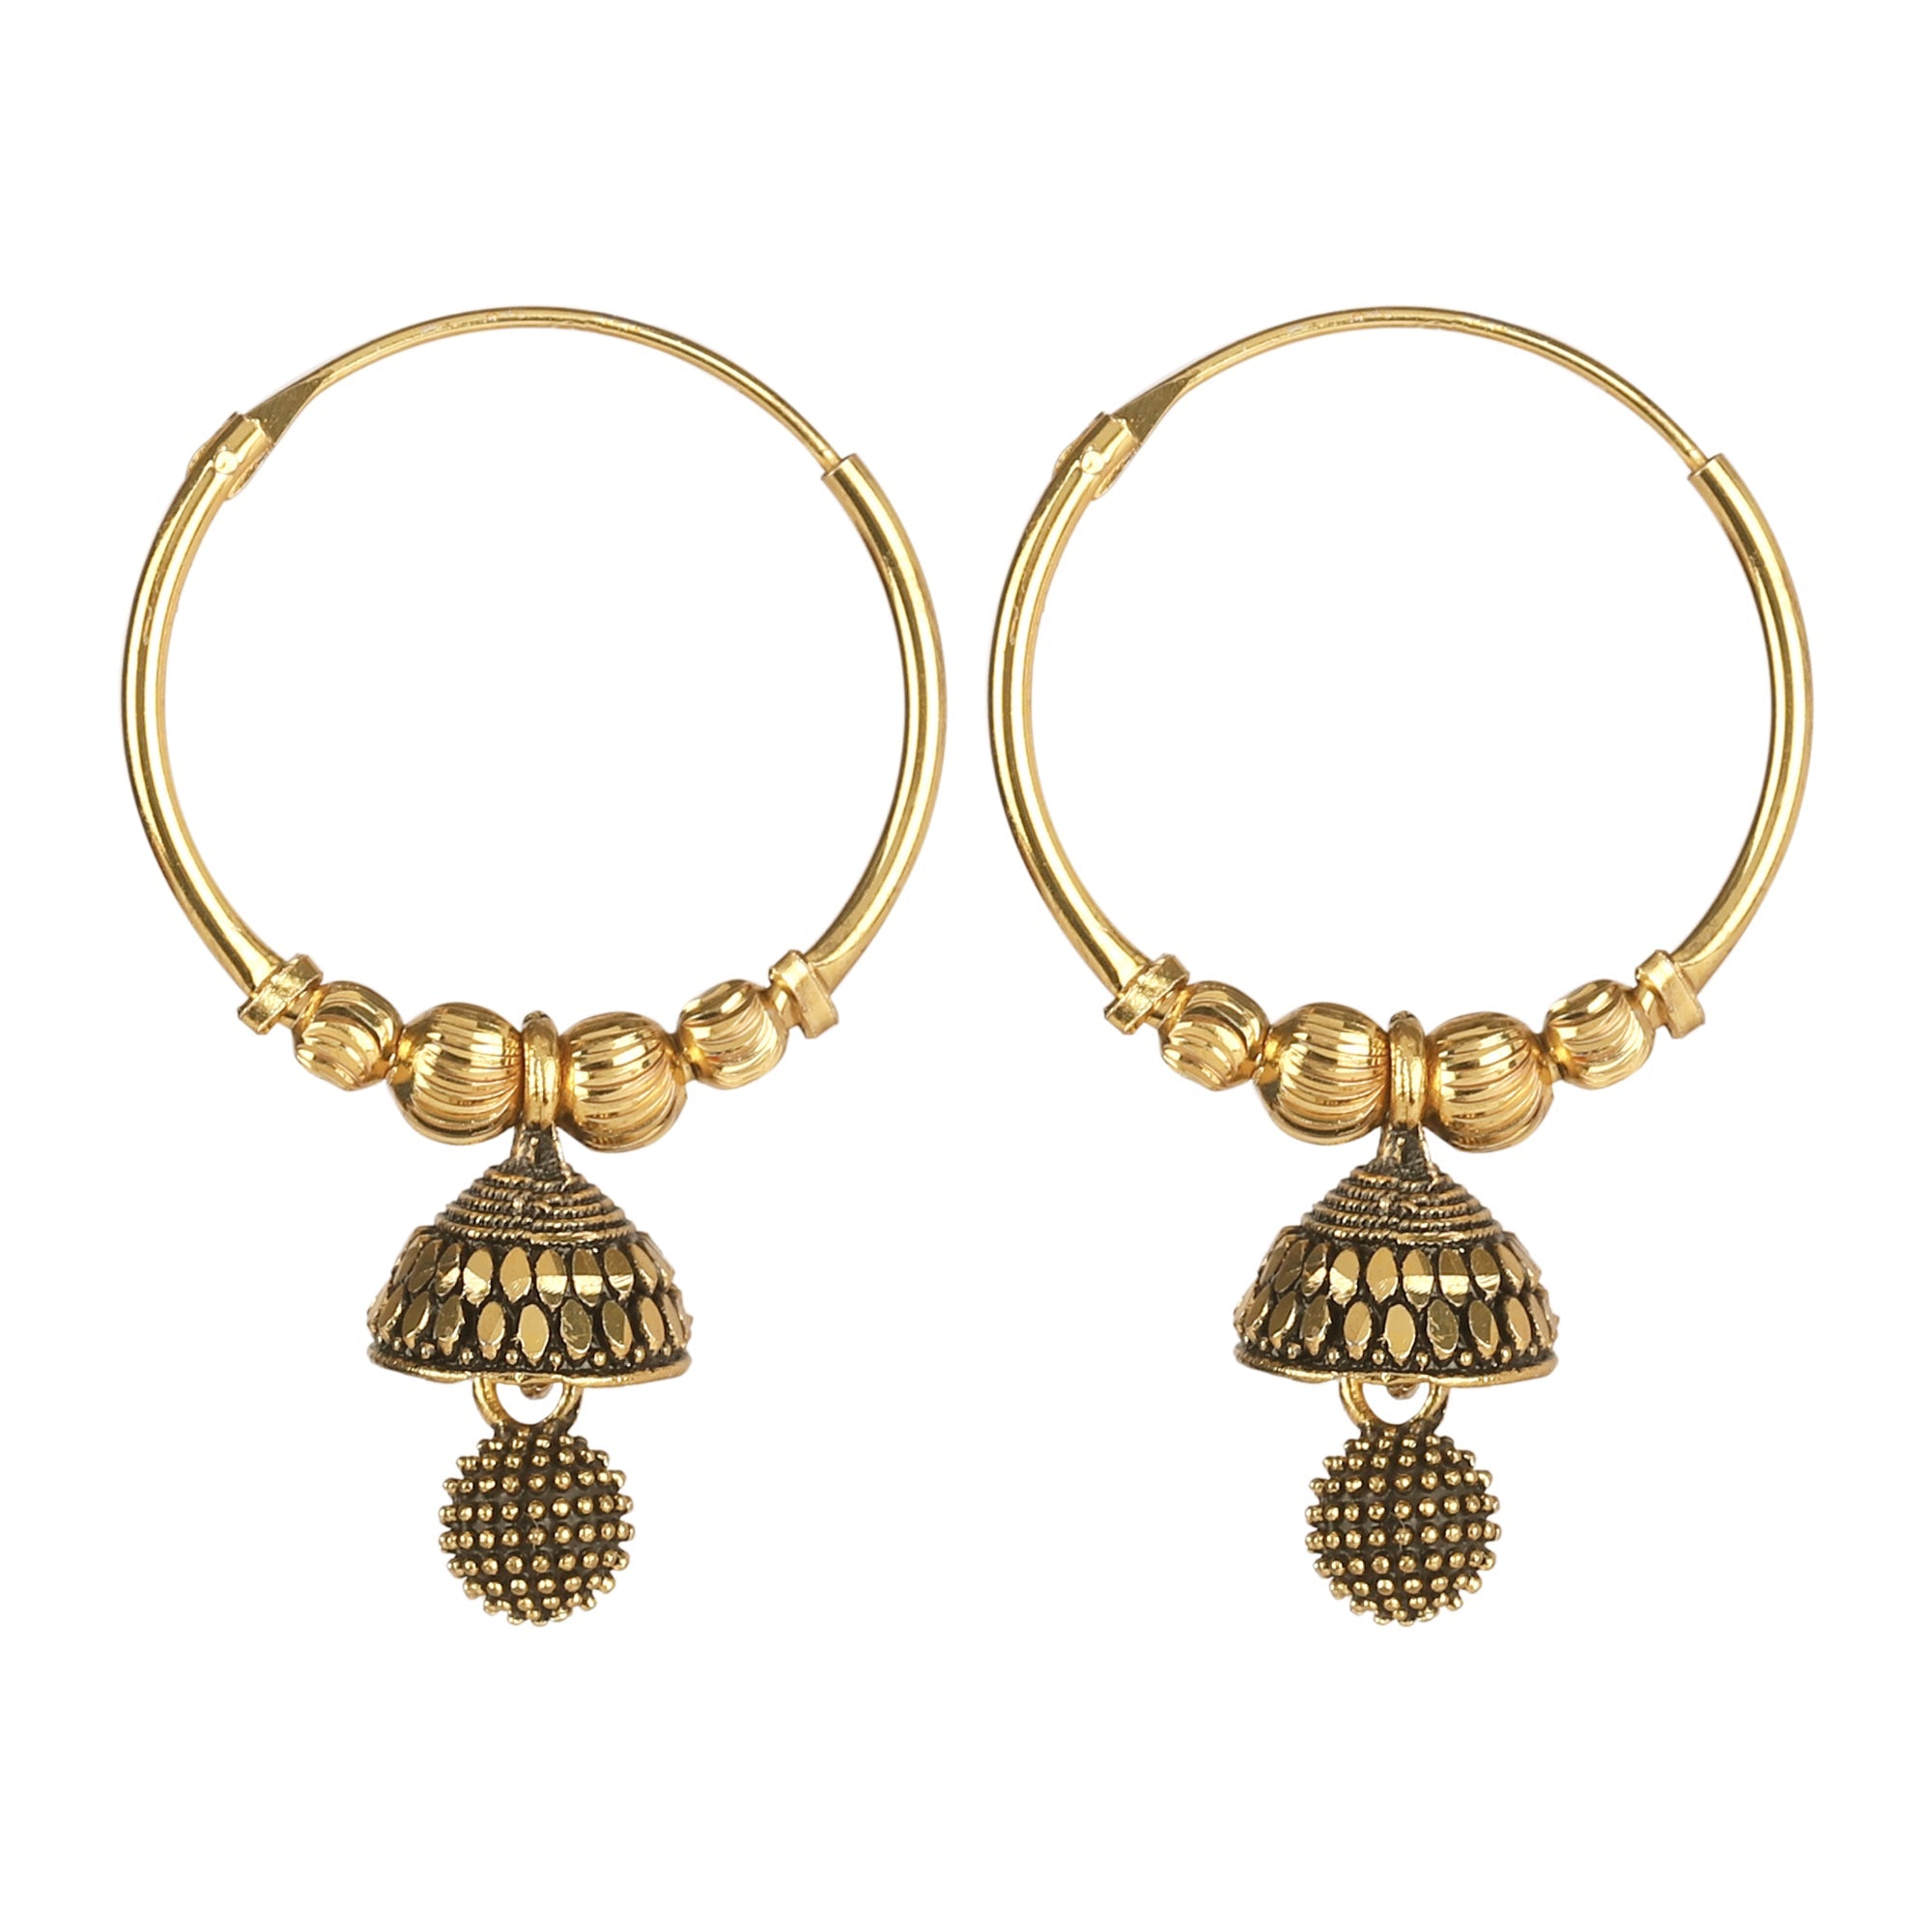 Latest Gold Small Earring ||Studs|| Designs Huge Collection | Stud earrings,  Small earrings studs, Small earrings